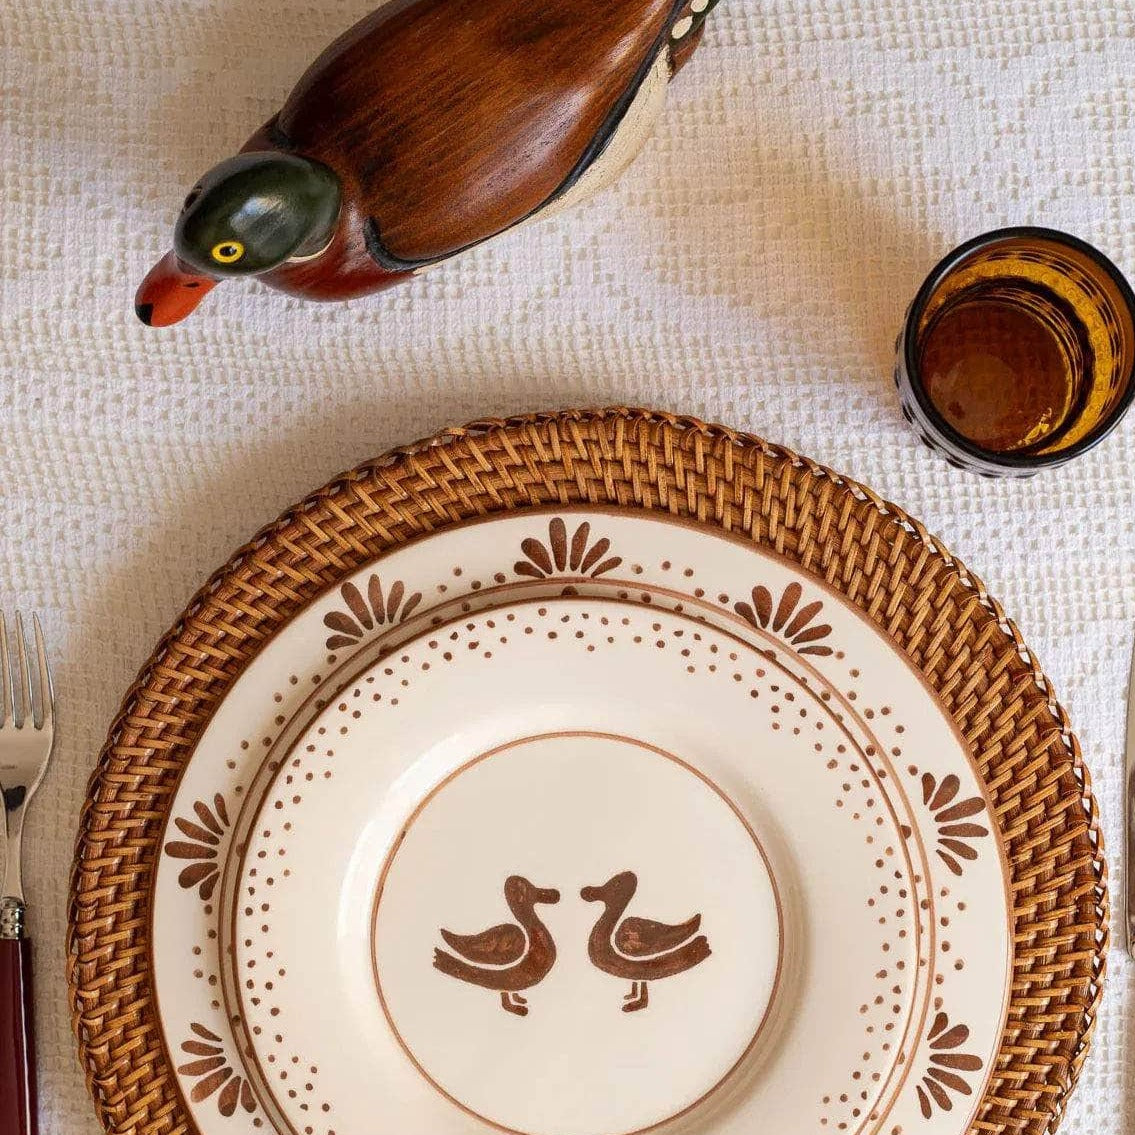 Patos (Ducks) Hand-Painted Dessert Plate